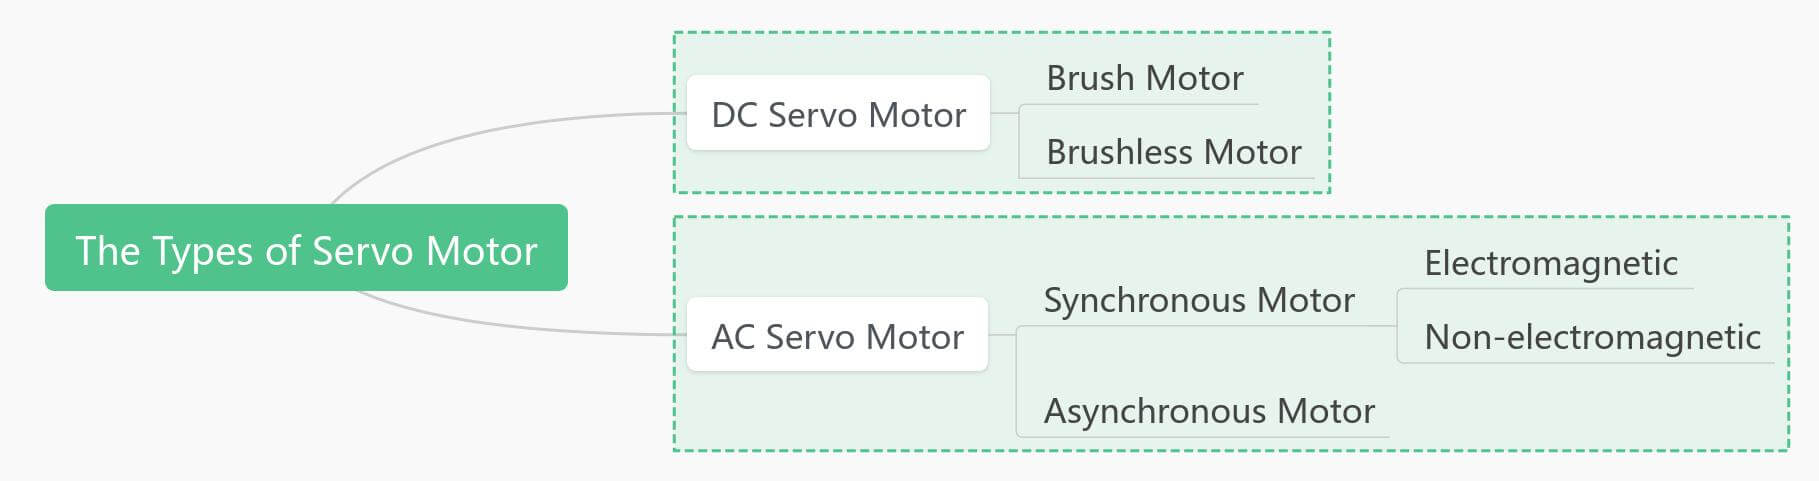 Types of Servo Motor